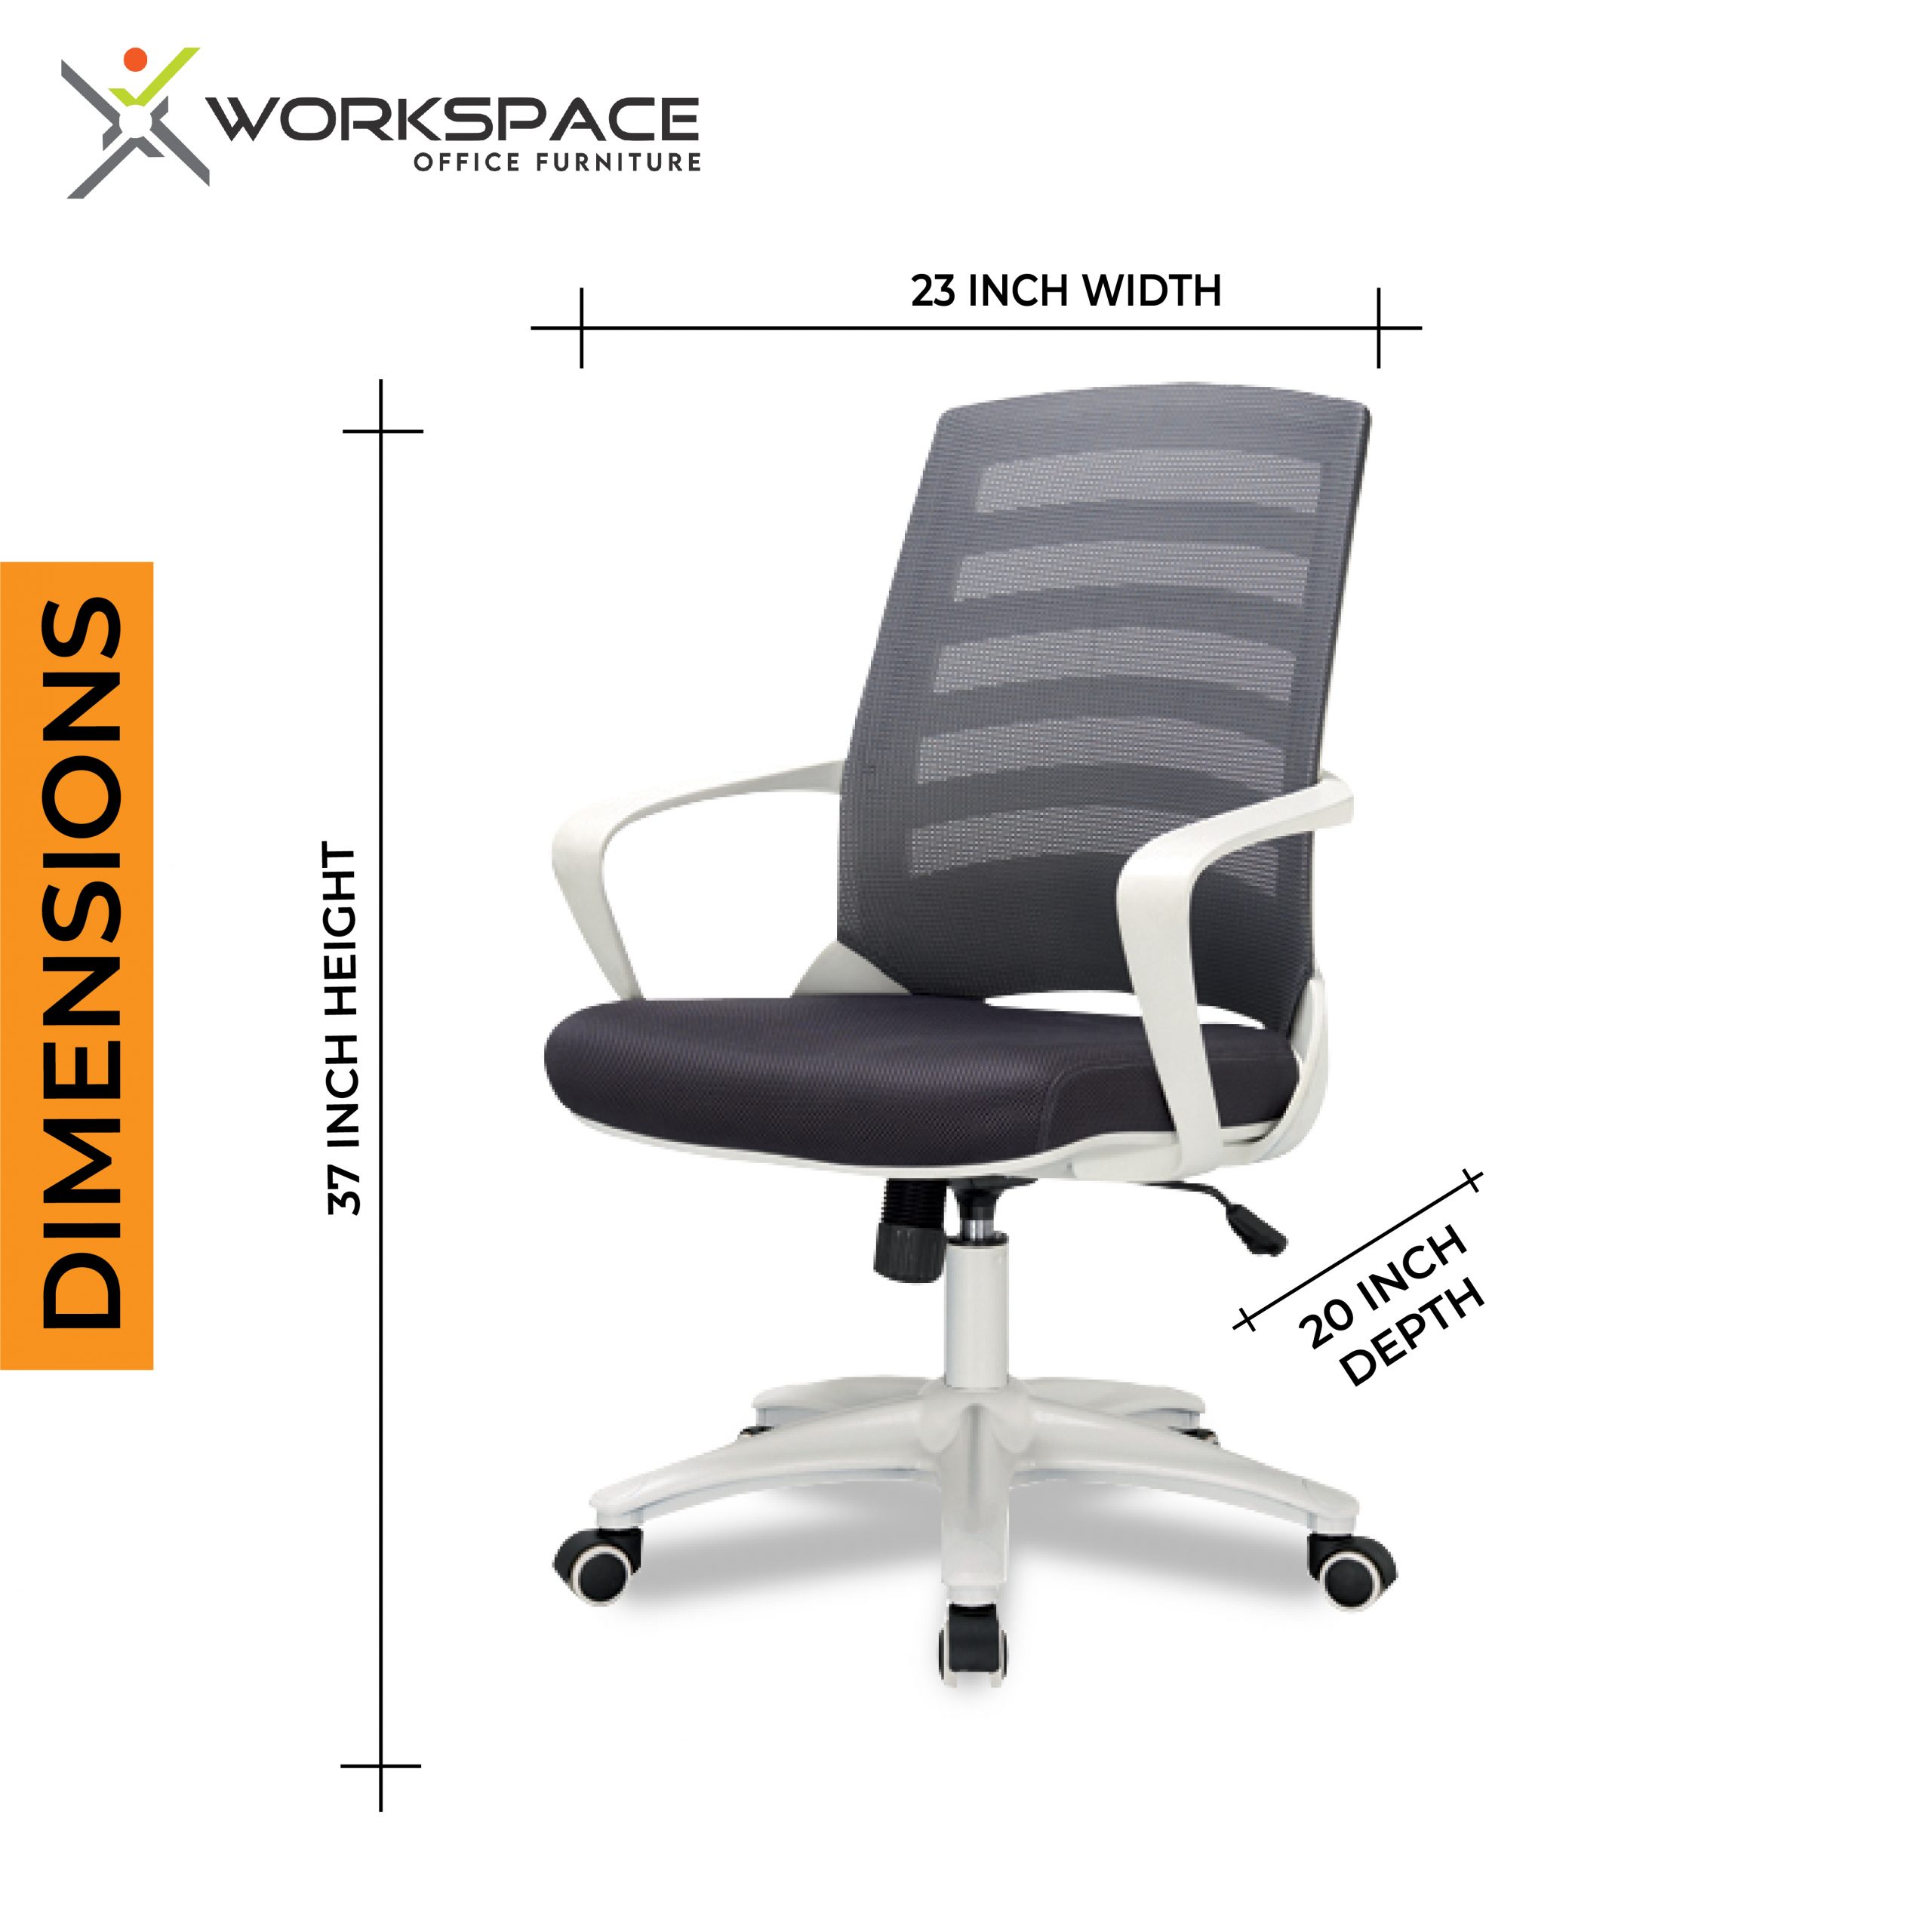 Glassgow Staff Chair - Dimensions